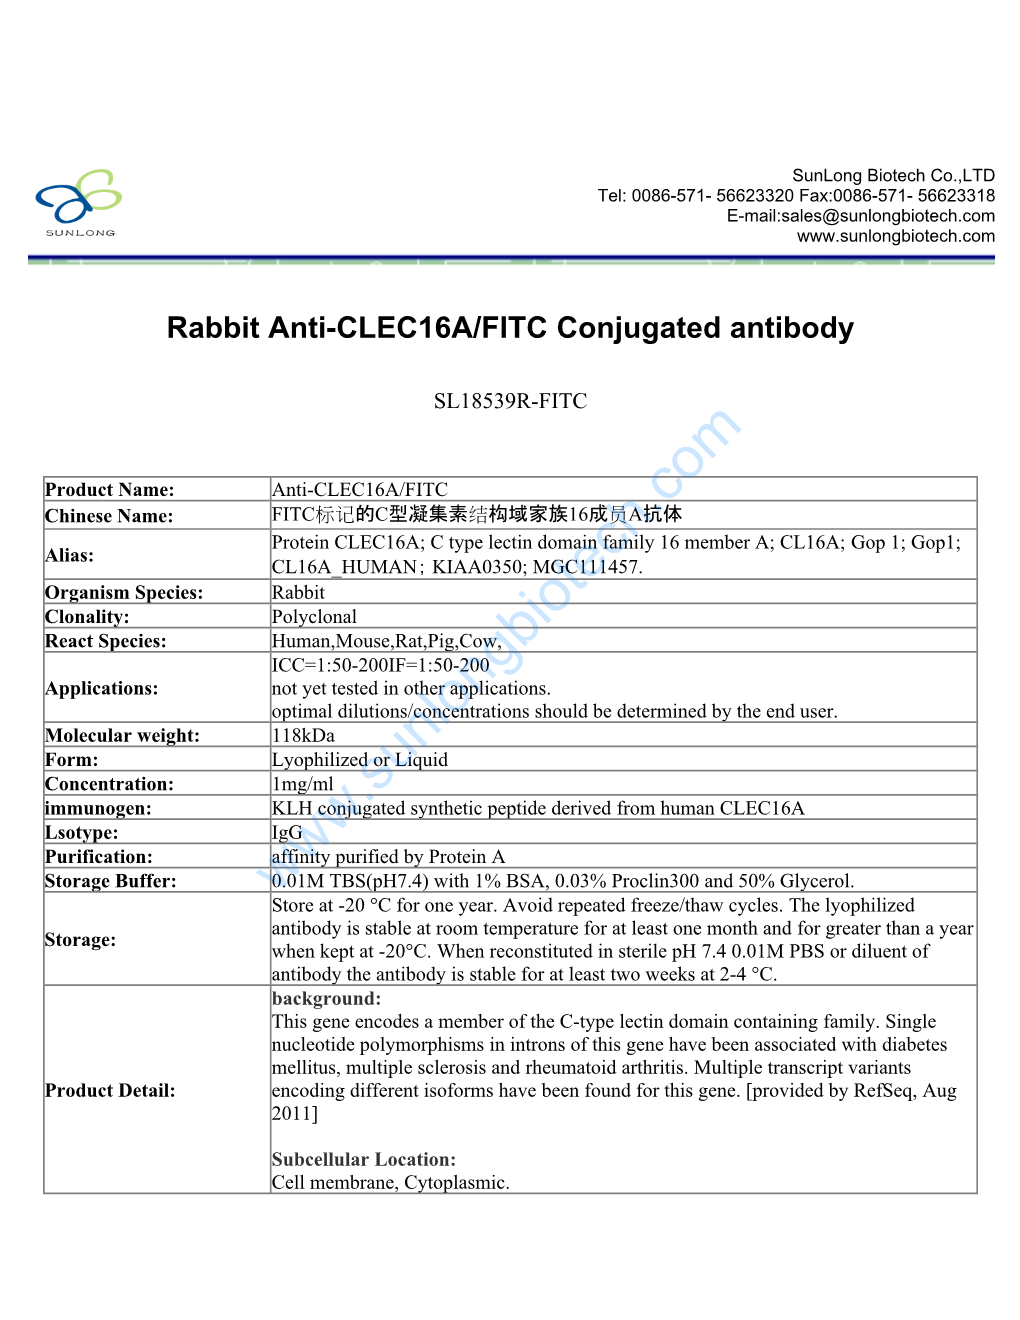 Rabbit Anti-CLEC16A/FITC Conjugated Antibody